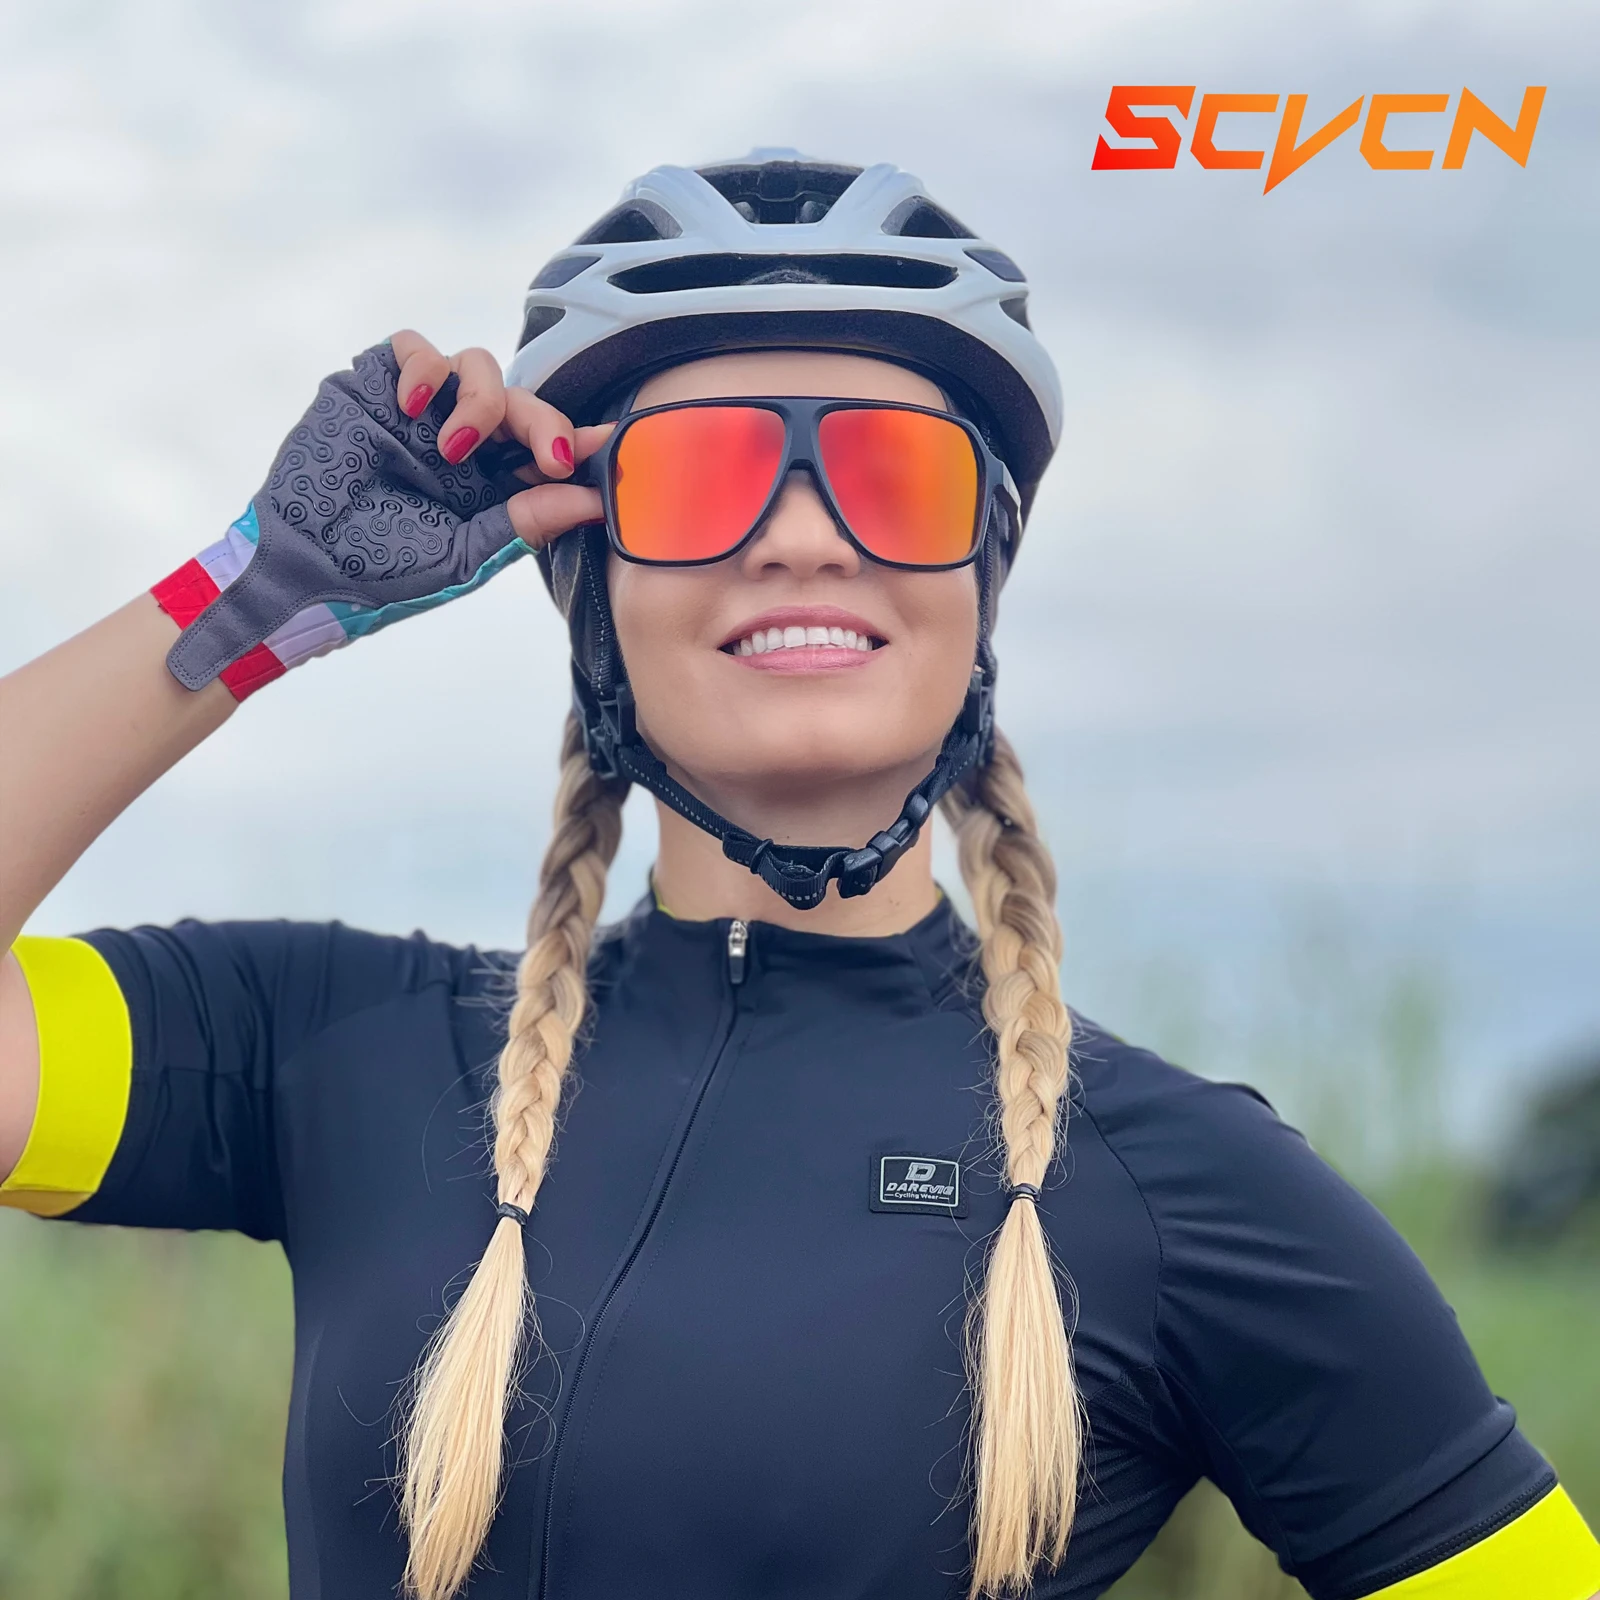 SCVCN Πολωμένος Ανακύκλωσης Γυαλιών Άνδρες Γυναίκες Υπαίθριος Αθλητισμός που Τρέχει τα γυαλιά Ηλίου Βουνού, Ποδήλατο Δρόμου Γυαλιά Ασφάλειας UV400 Γυαλιά